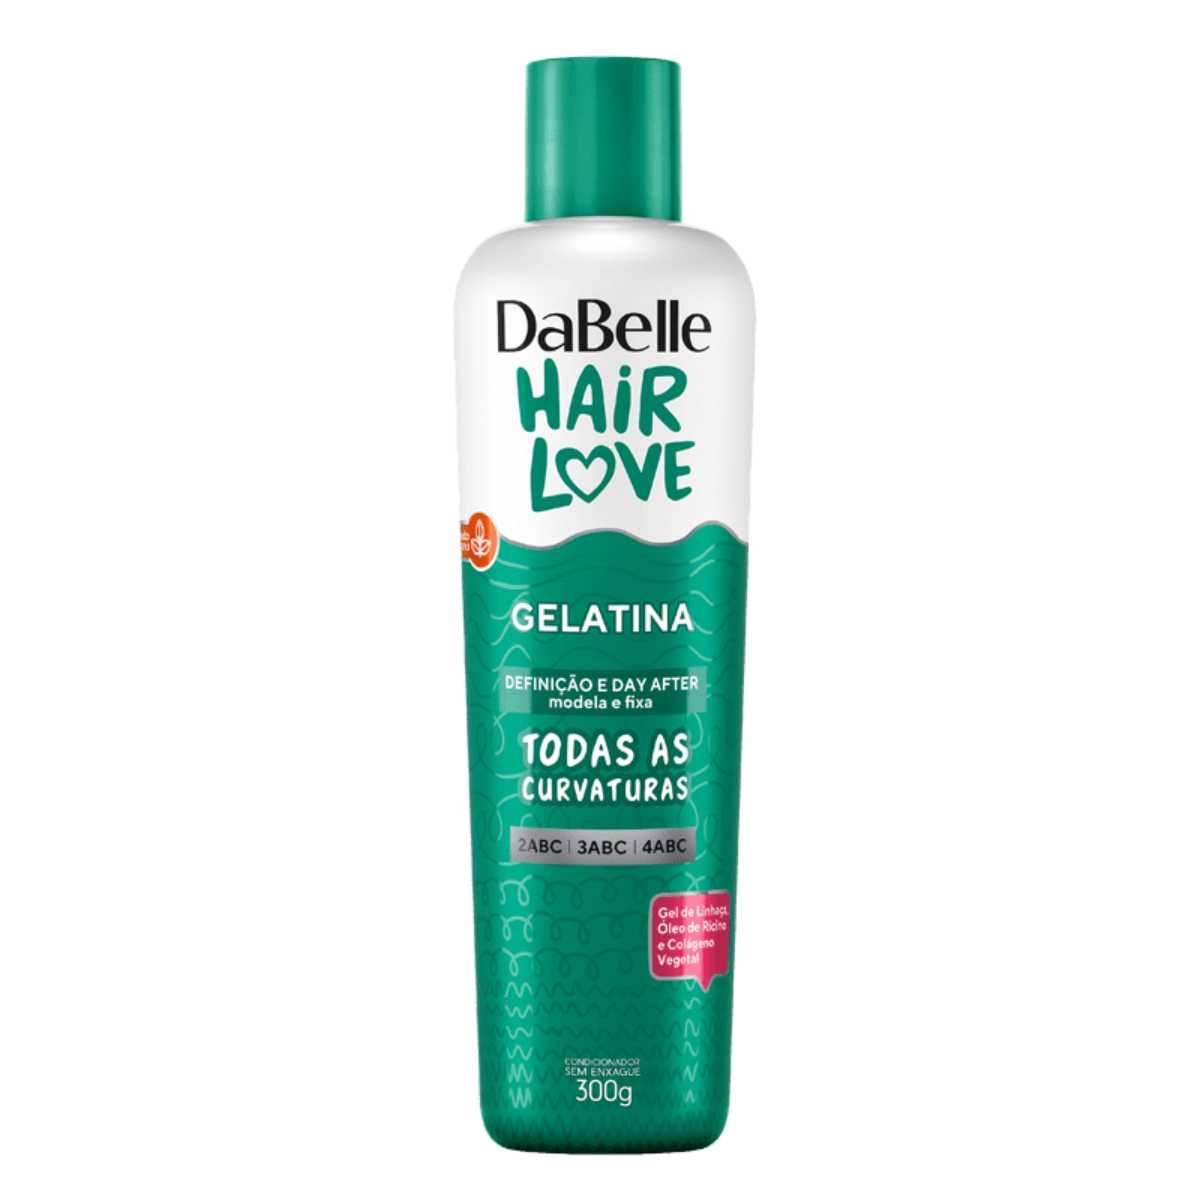 Gelatina Capilar DaBelle Hair Love com 300ml 300ml